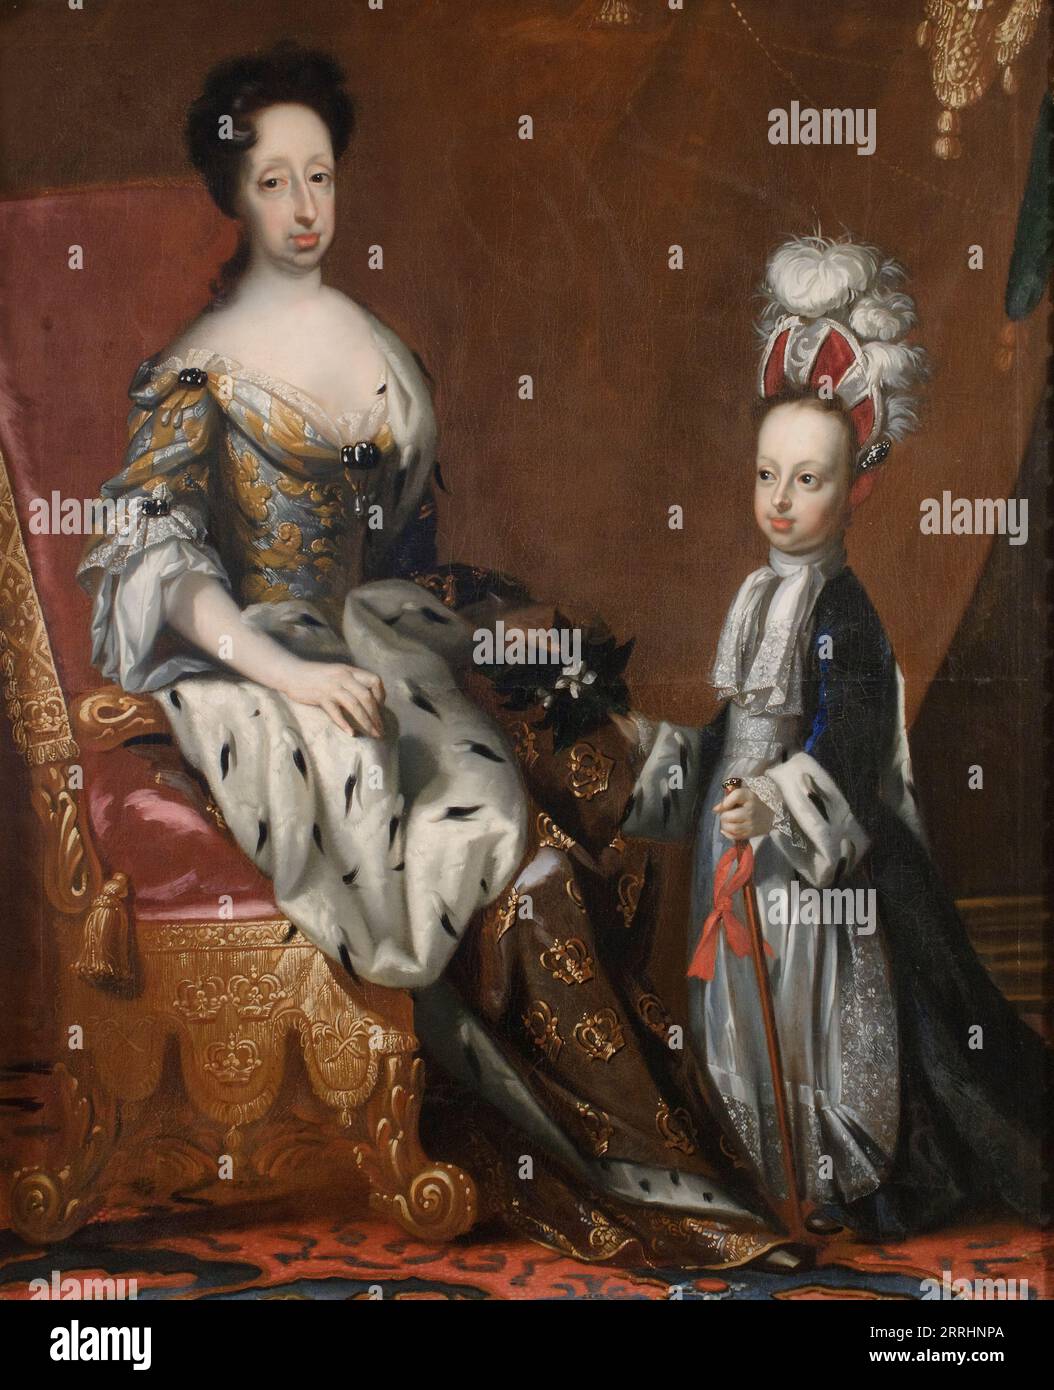 Hedvig Eleonora, 1636-1715, Queen of Sweden and Karl Fredrik, 1700-1739, Duke of Holstein, 1704. Stock Photo